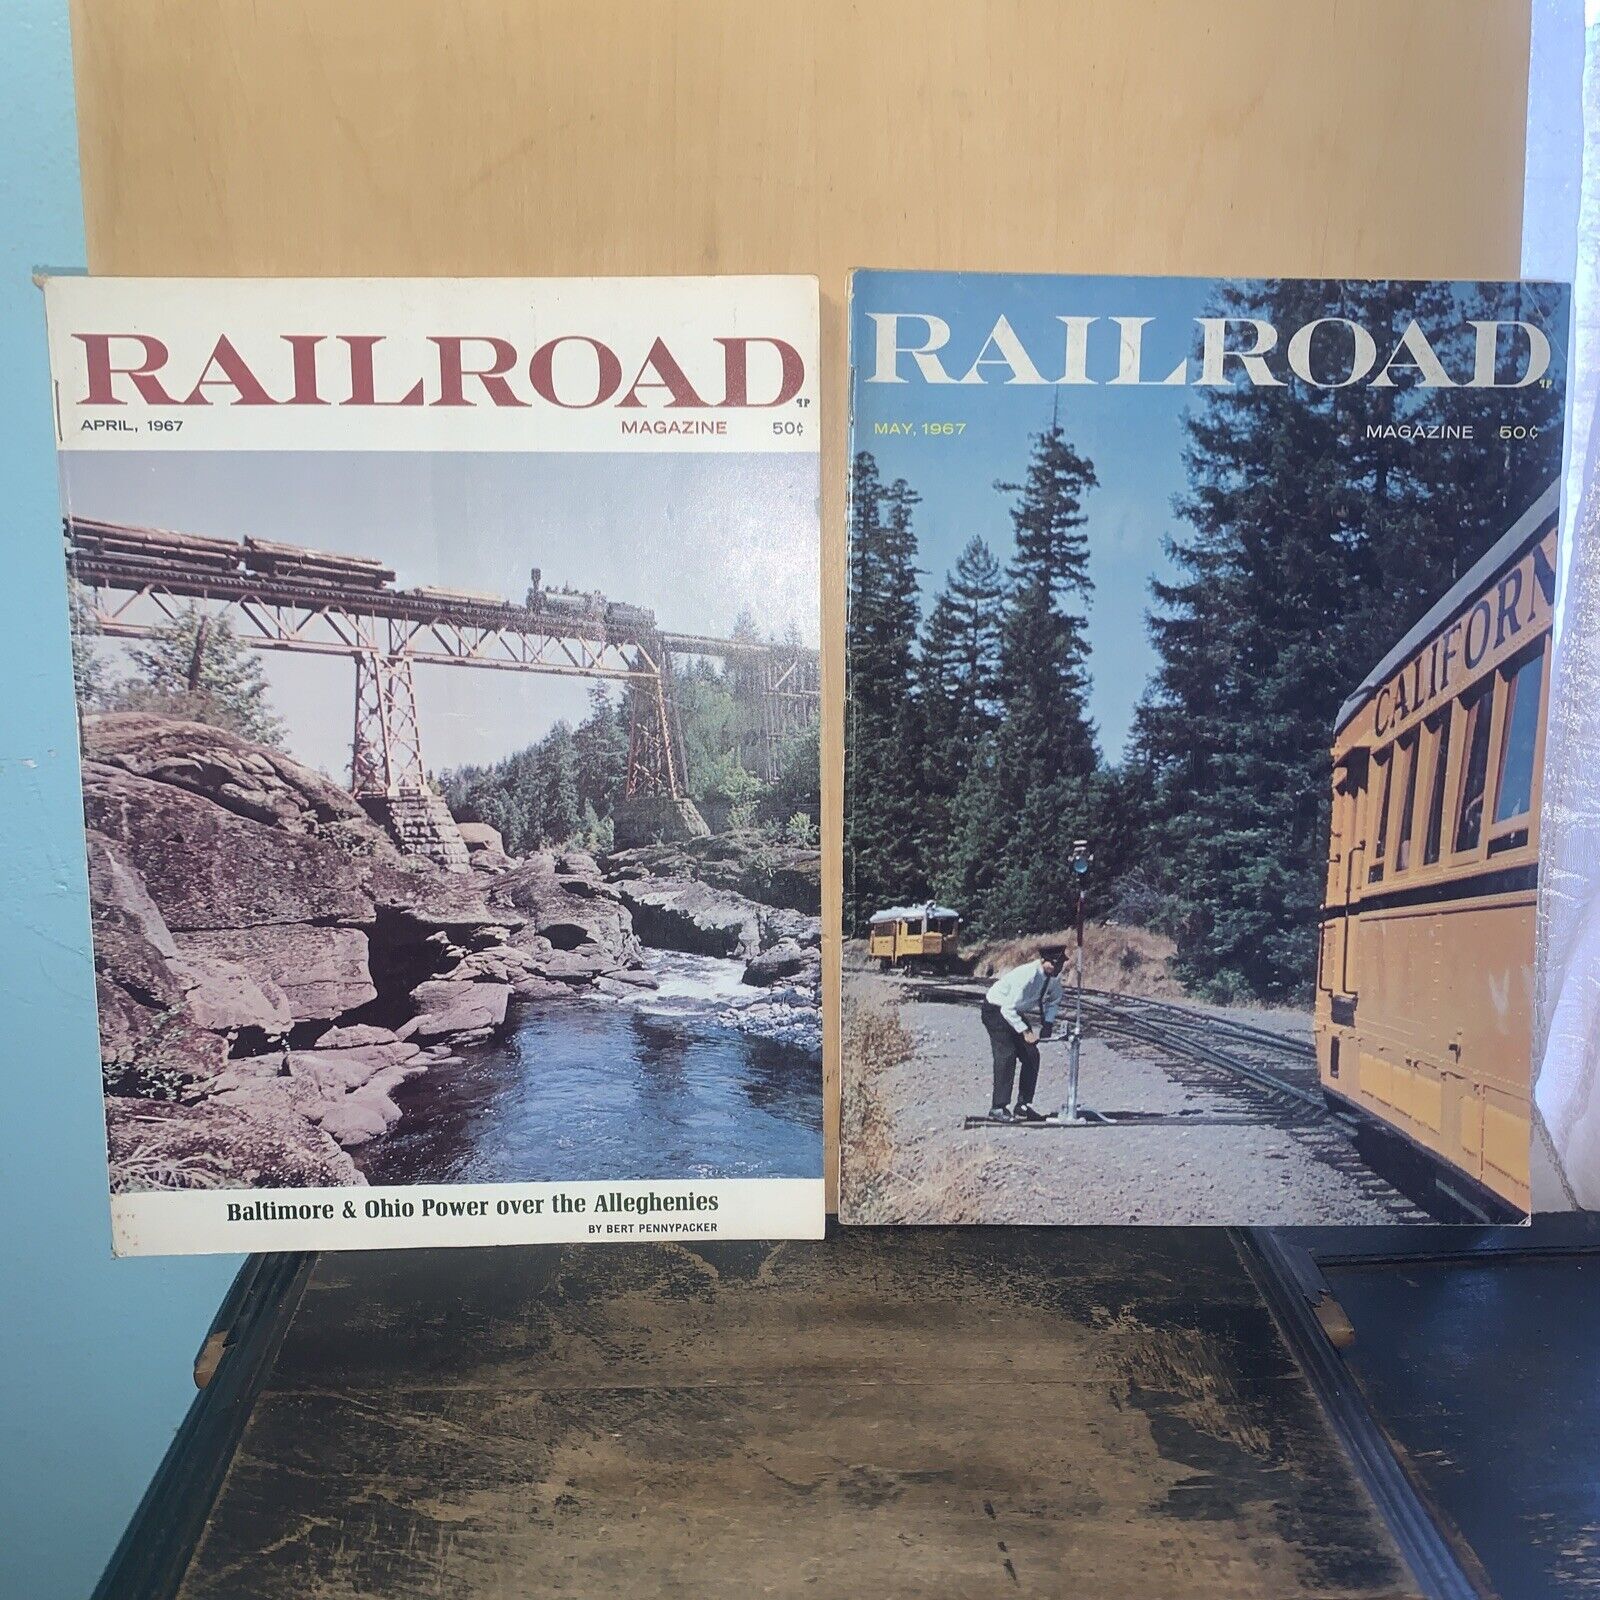 Railroad Magazine April & May 67 ￼ “baltimore & Ohio Power Over The Alleghenies”